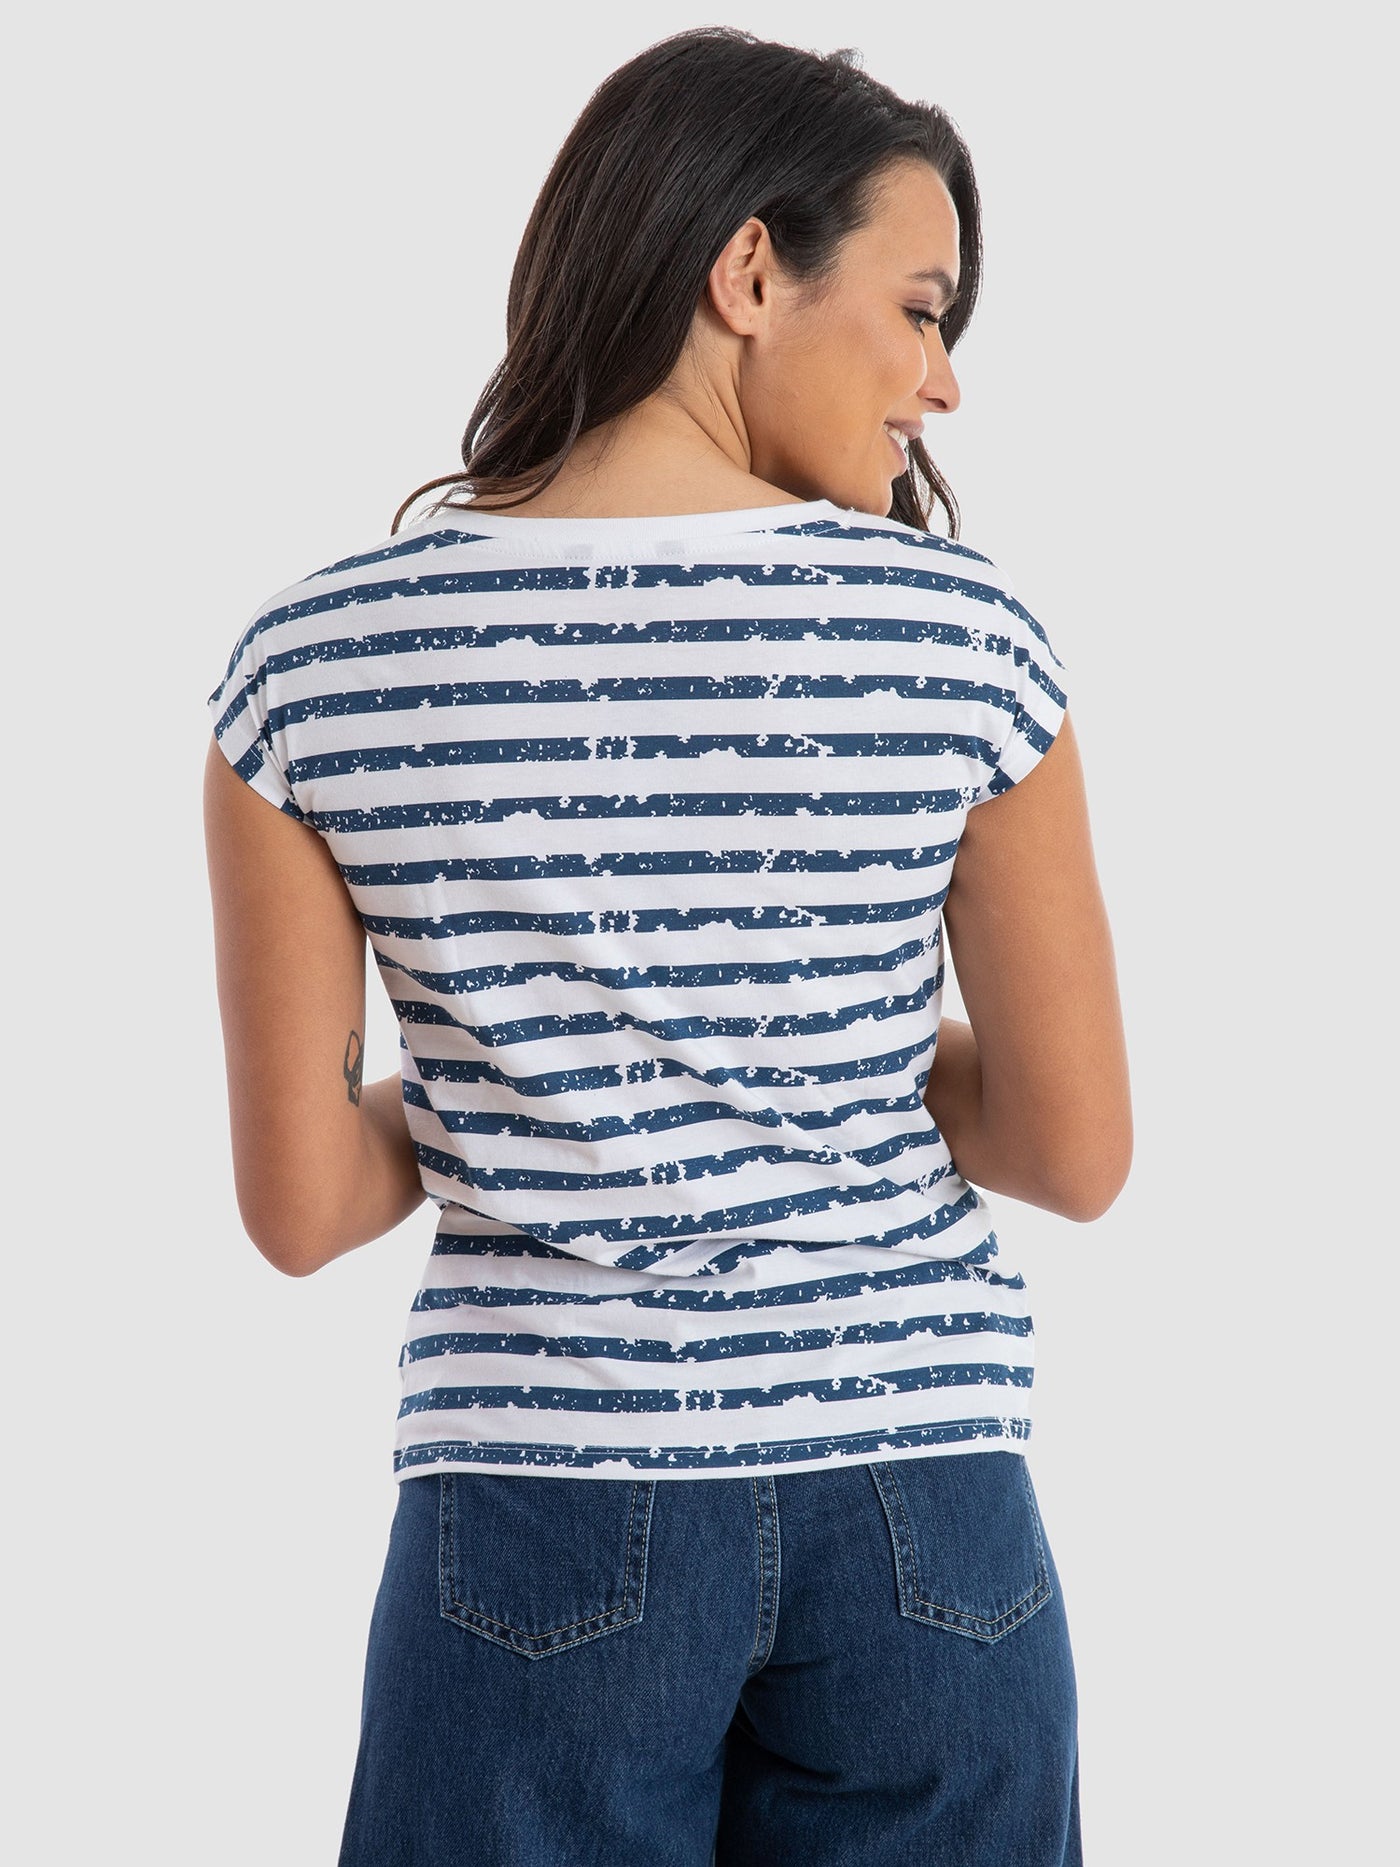 Premoda Womens Striped T-Shirt